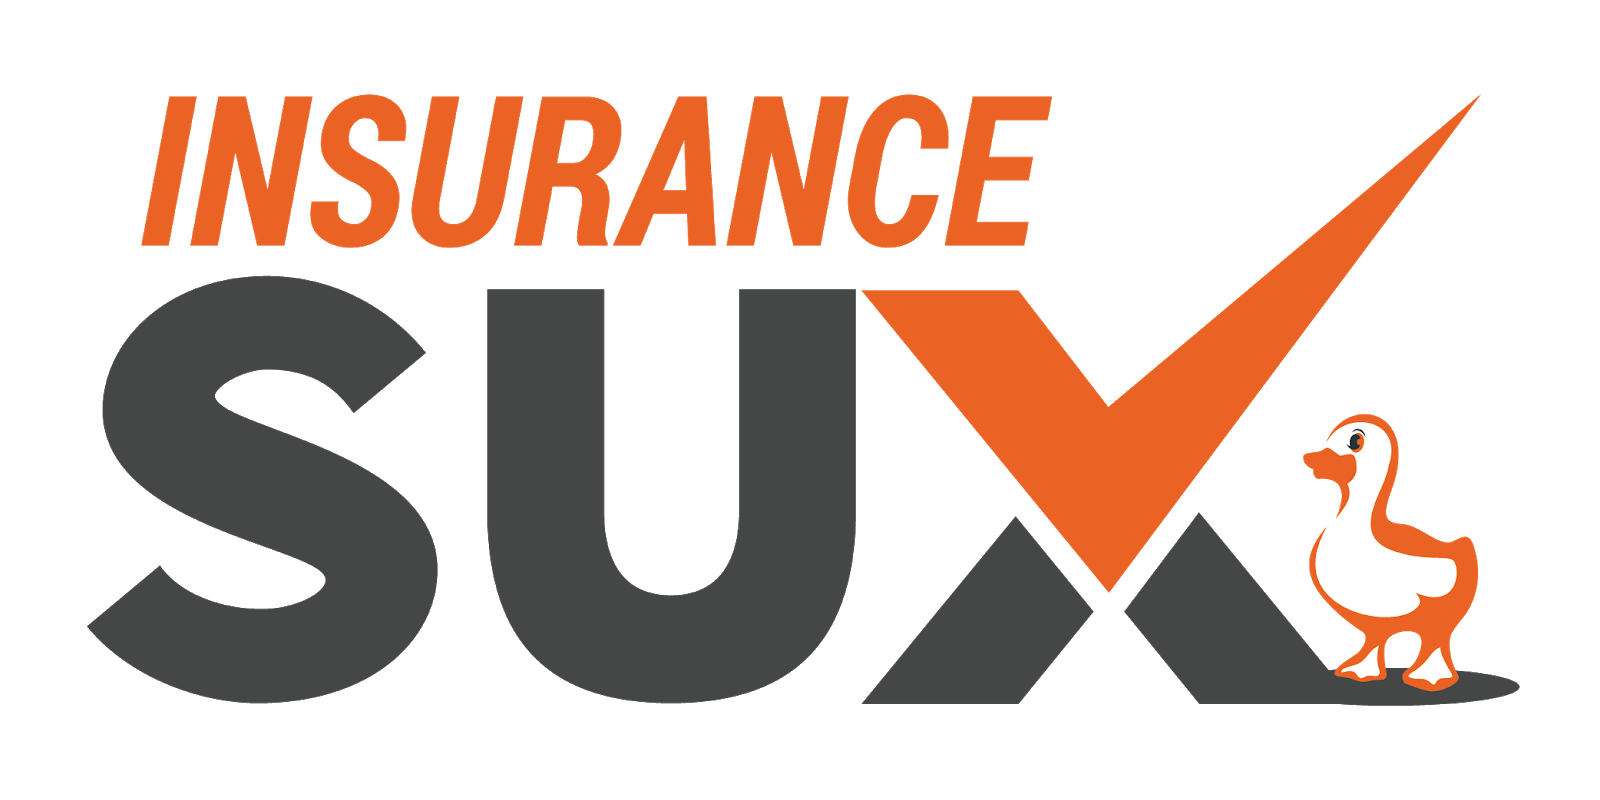 Insurance Sux